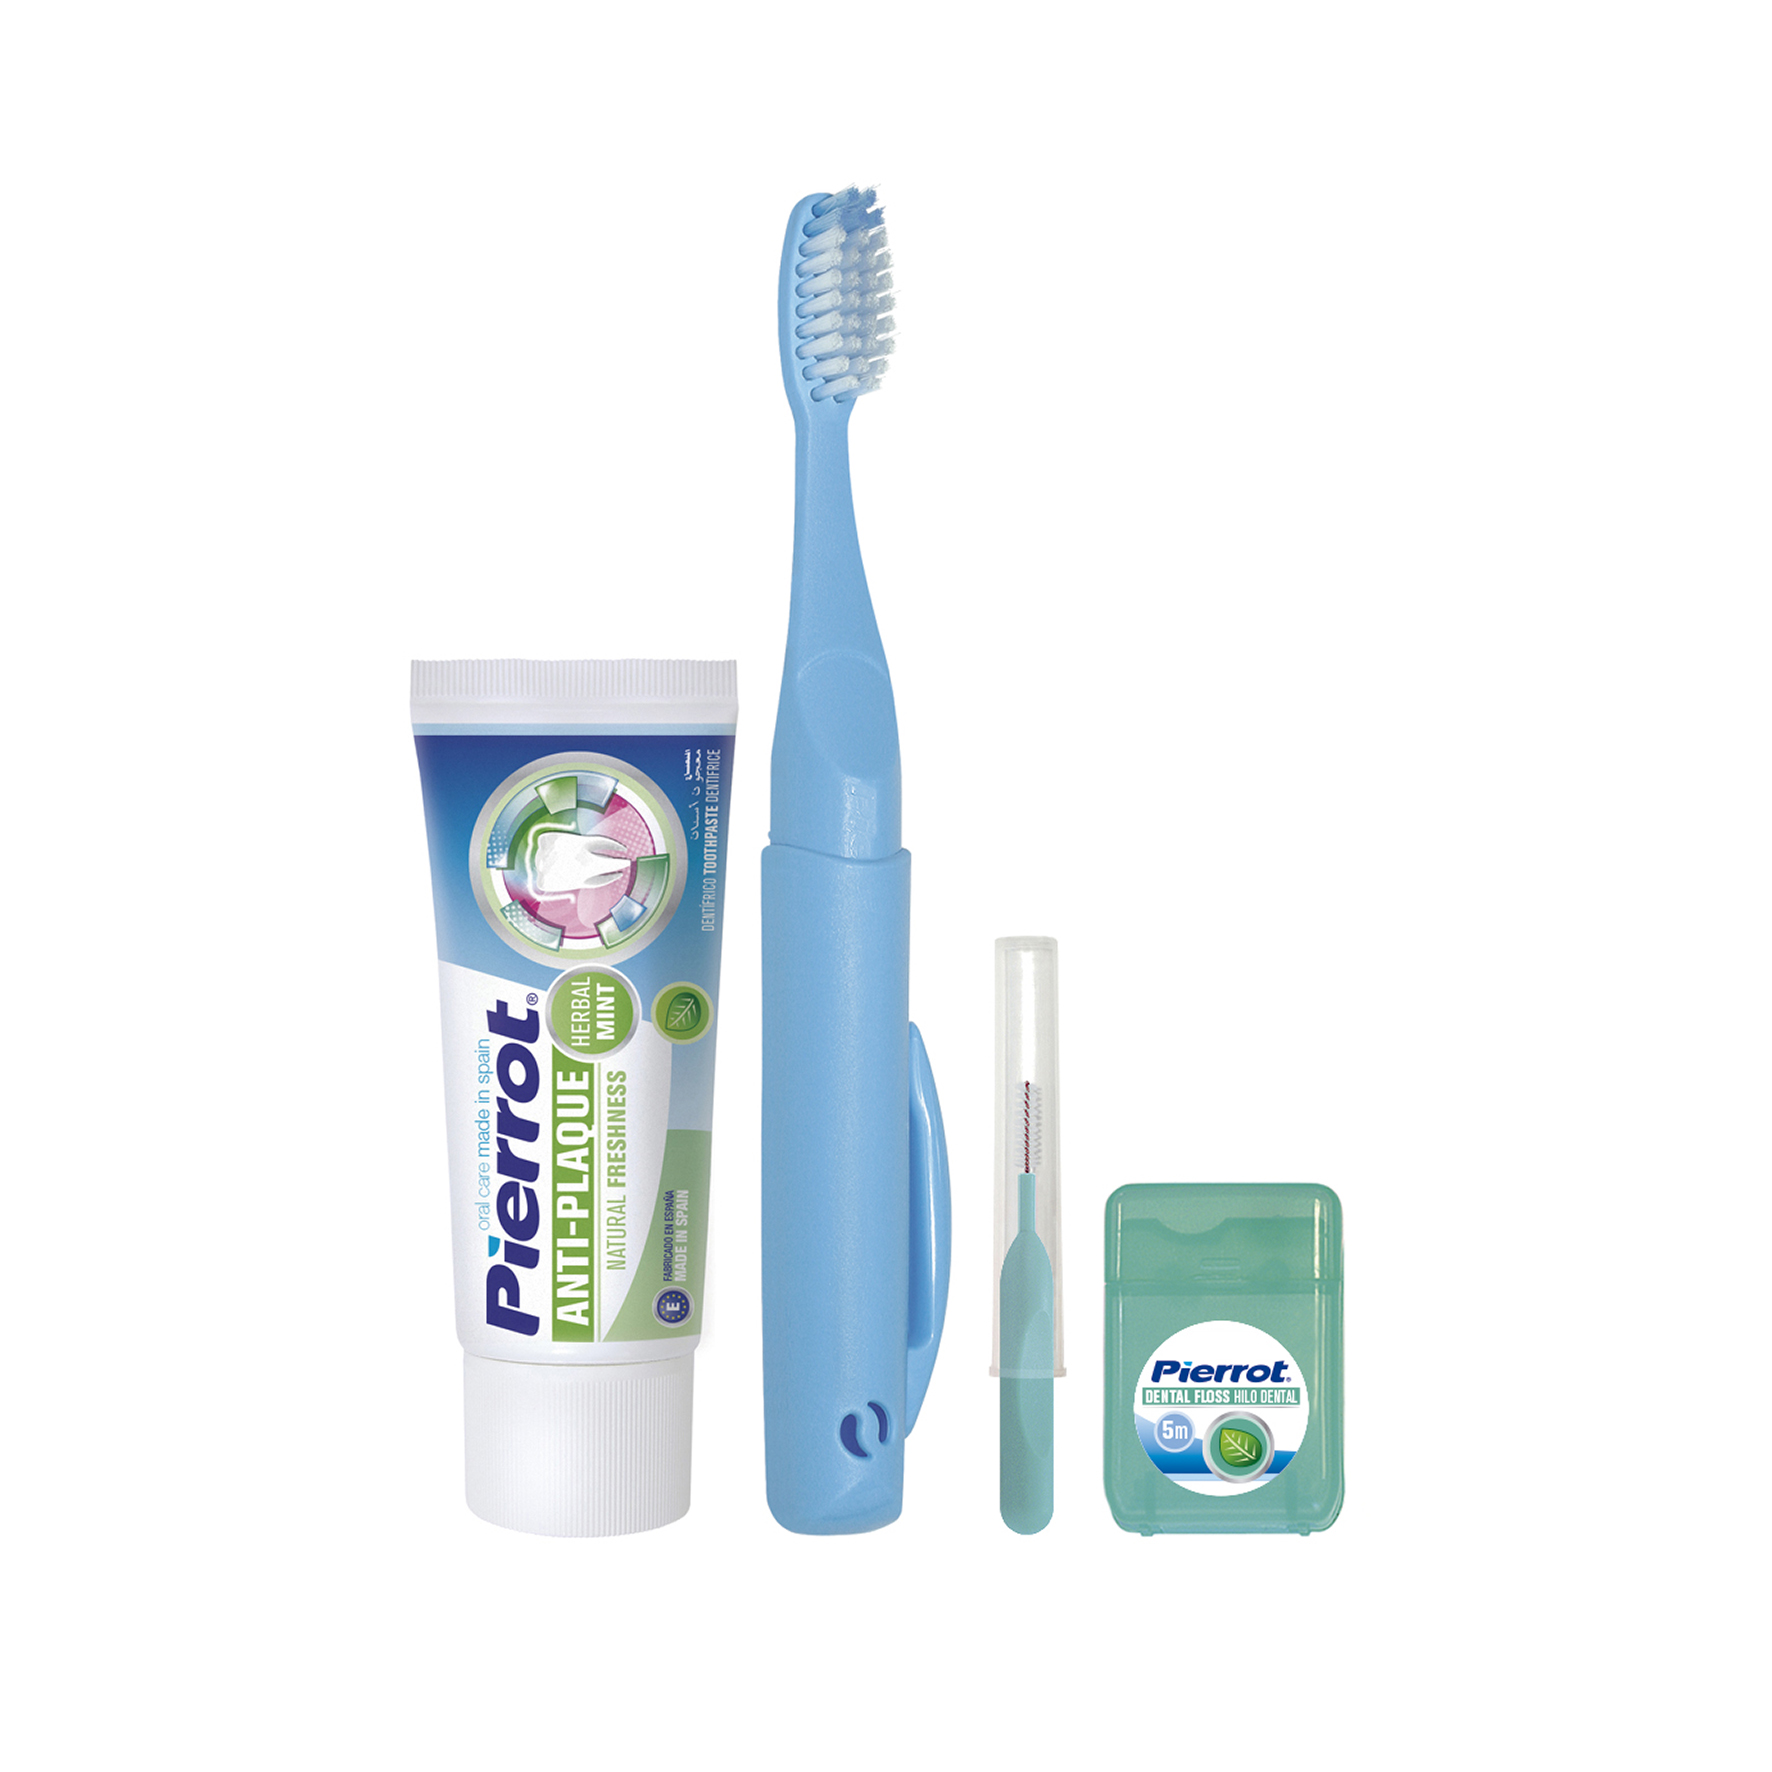 Kit dental infantil viaje Pierrot: cepillo de dientes, capuchón tiburón y  crema dental fresa 1 ud.